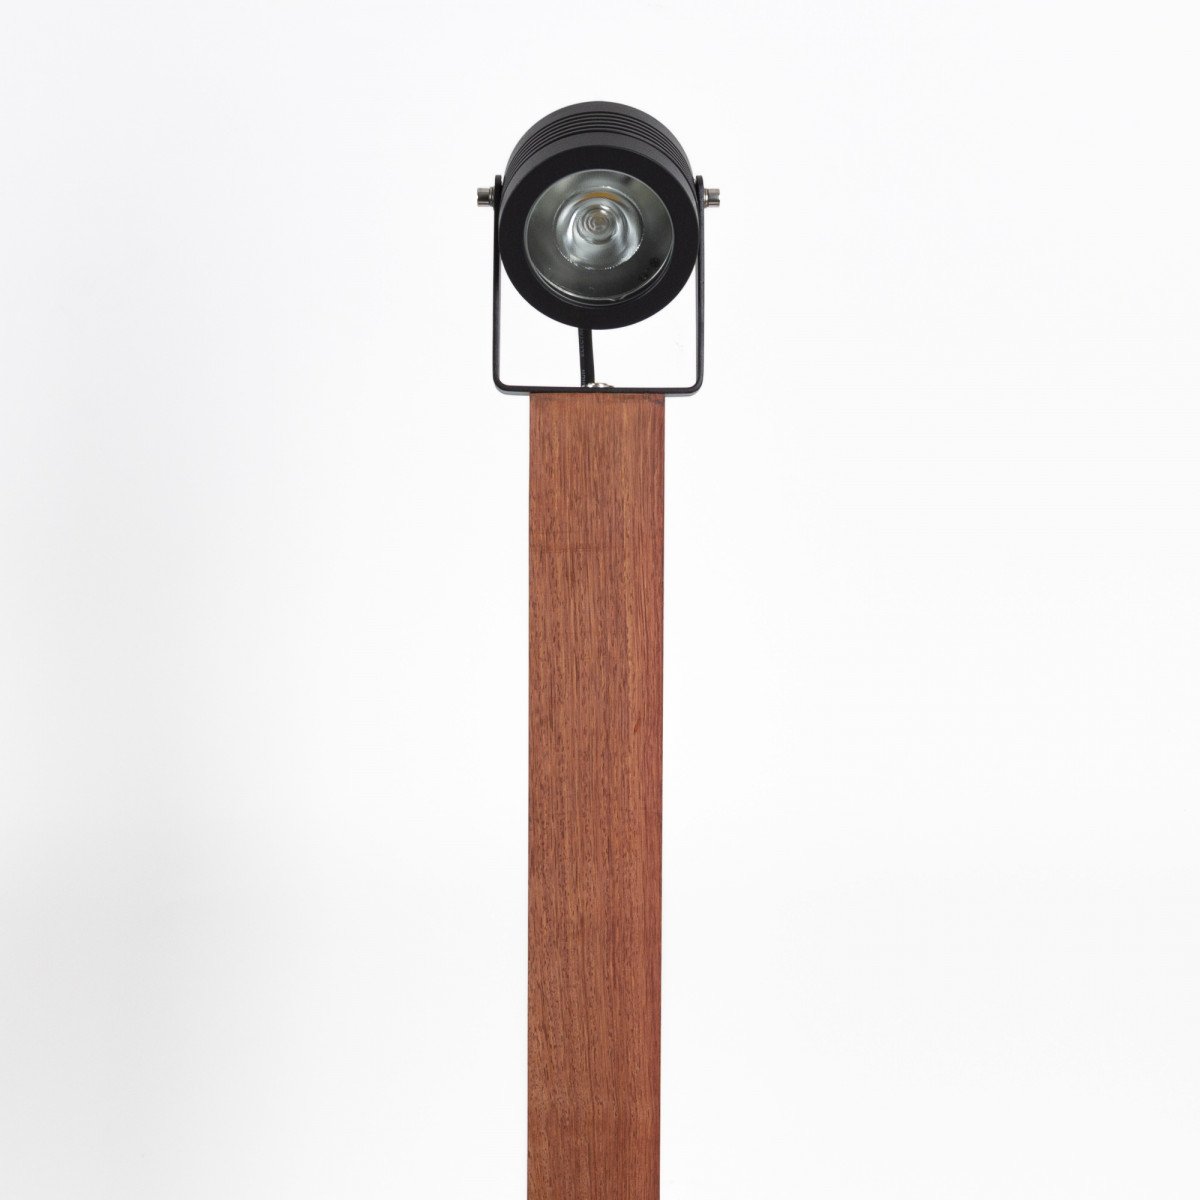 Richtbare LED tuinspot draaibaar en kantelbaar in matzwarte kleur op houten sokkel